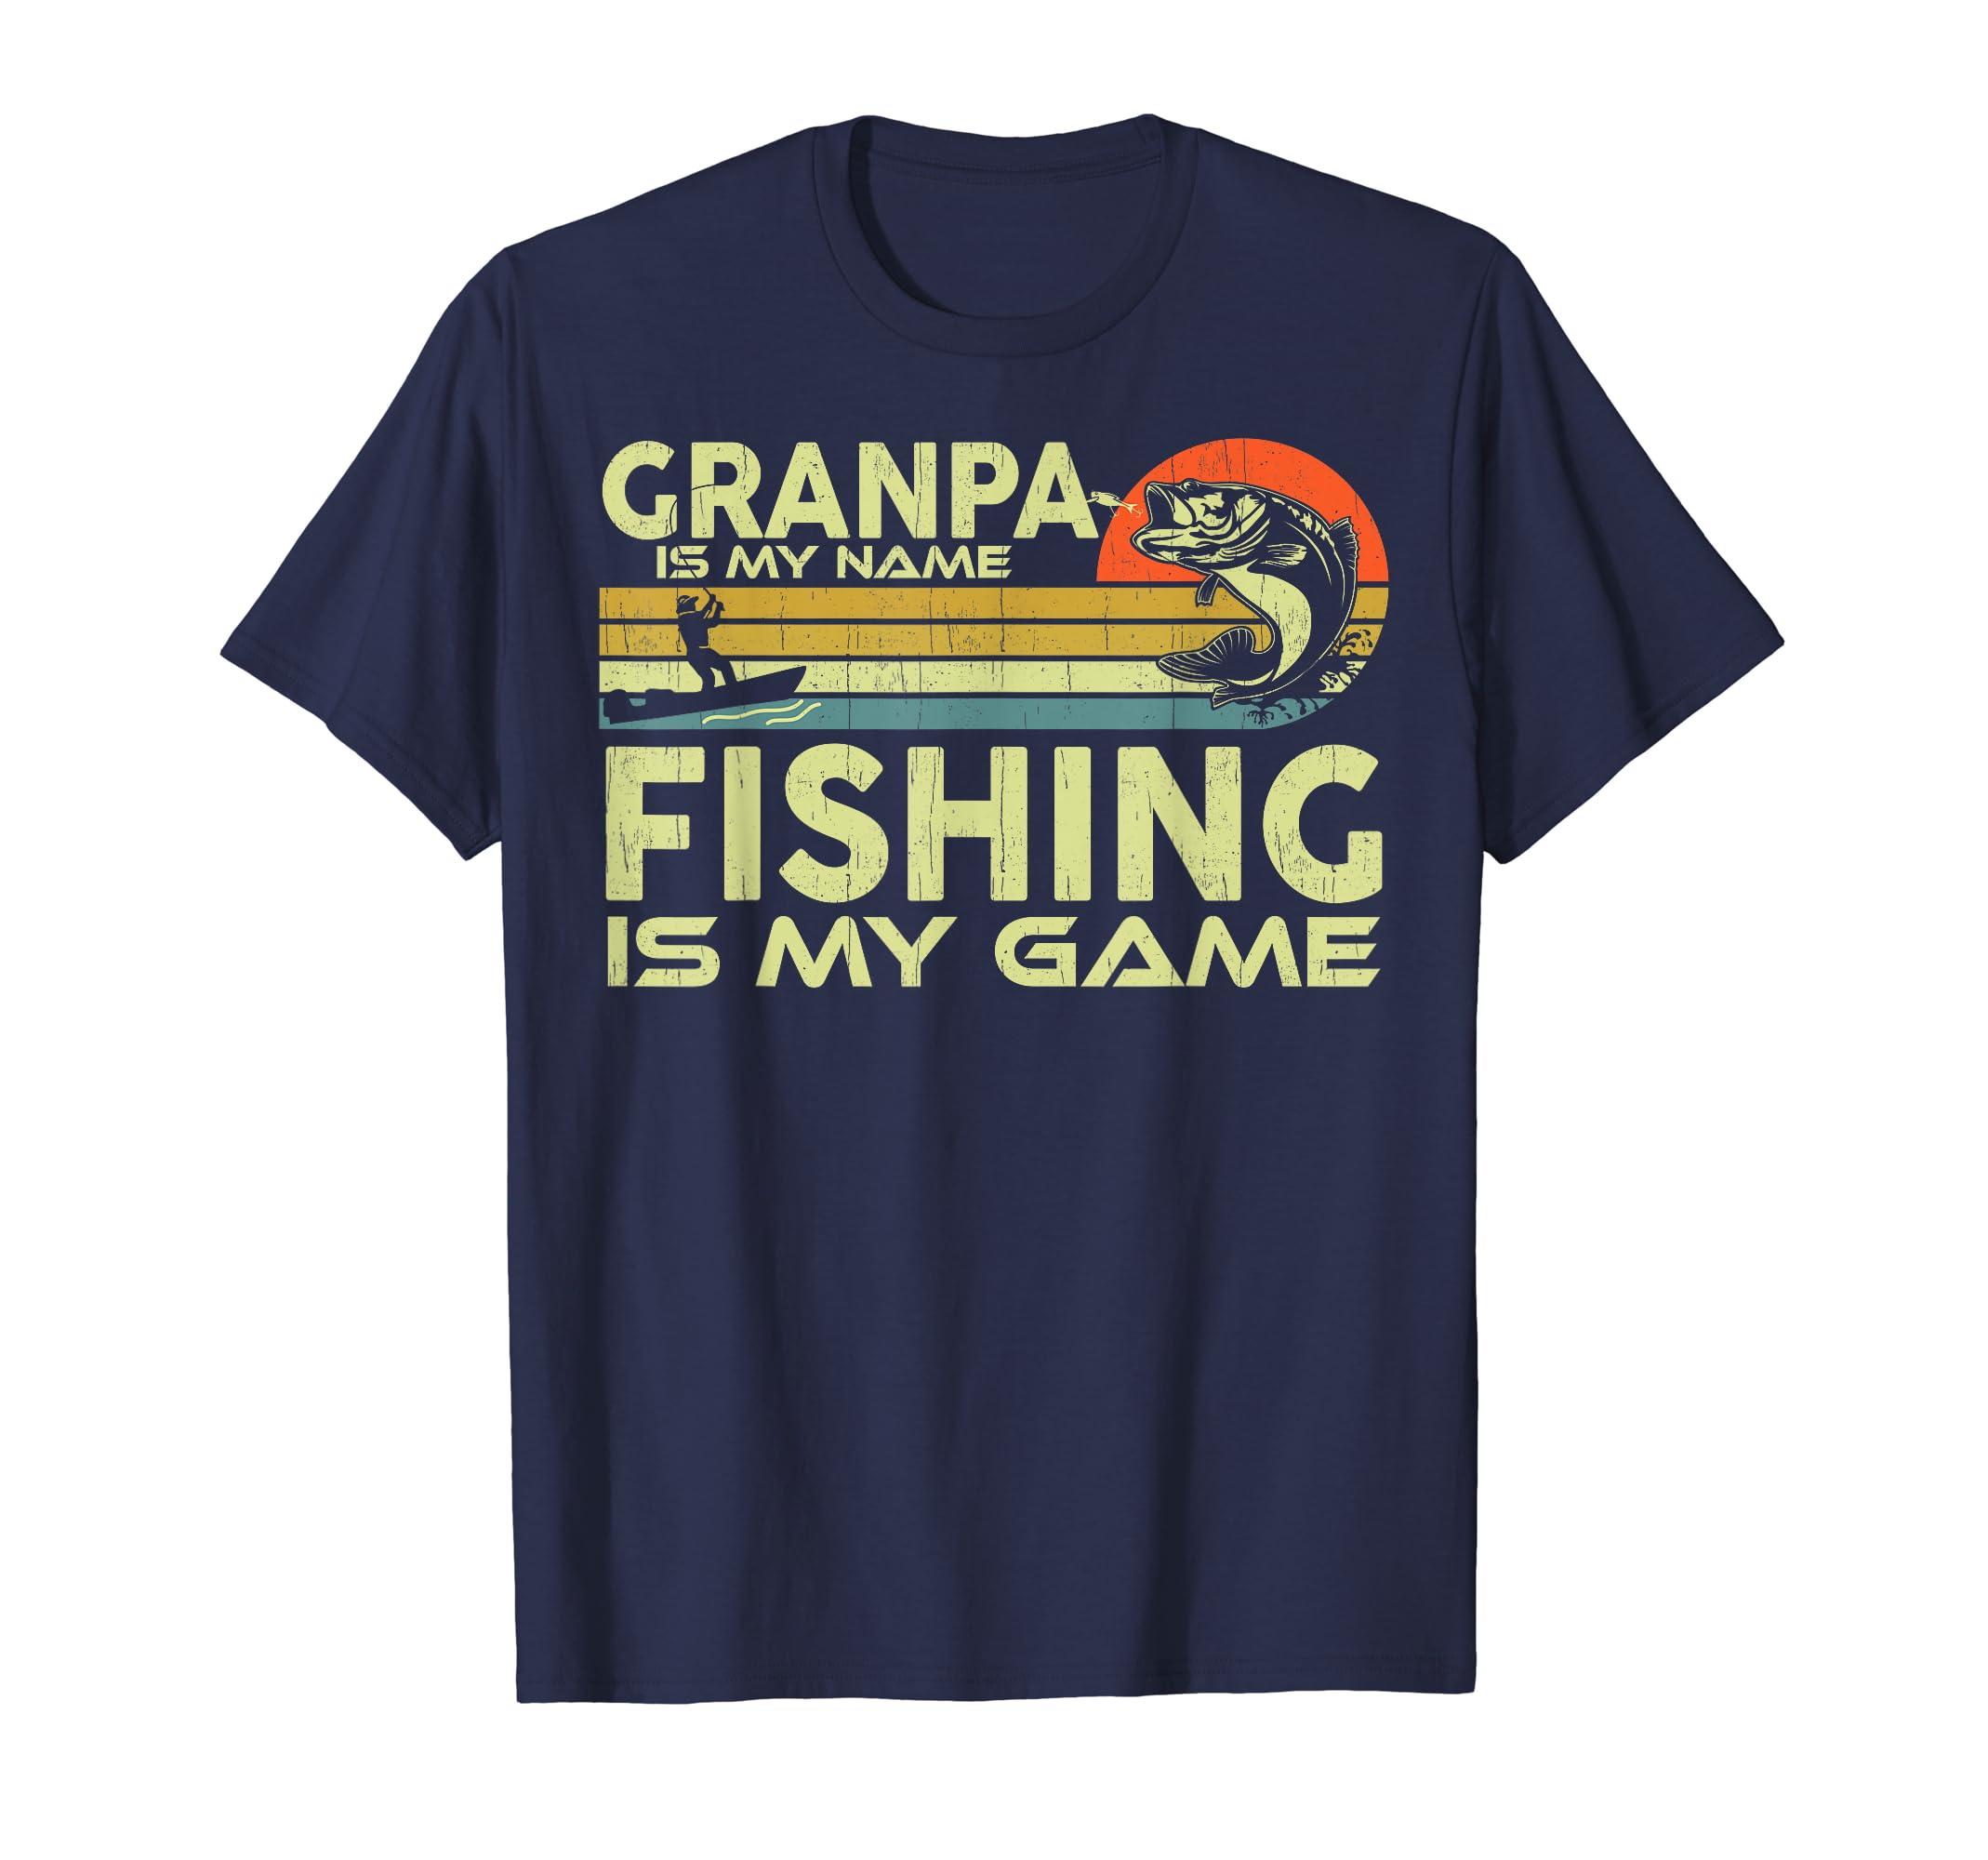 Caterpillar Fishing-shirt Grandpa Fishing Game Funny Vintage Dad T